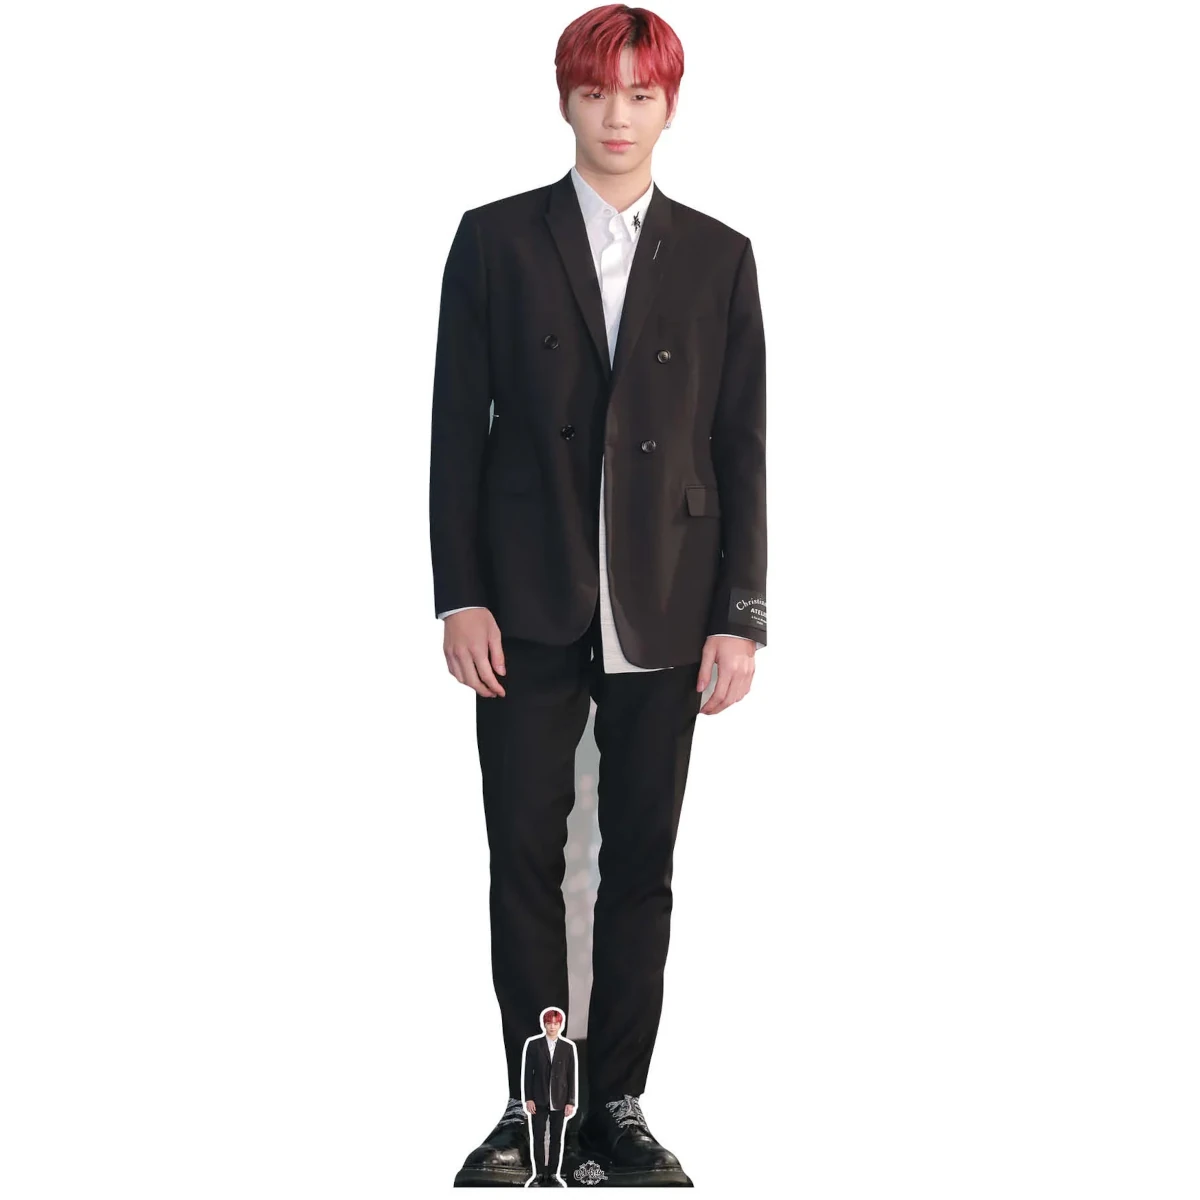 CS856 Kang Daniel 'Red Hair' (South Korean Singer) Lifesize + Mini Cardboard Cutout Standee Front